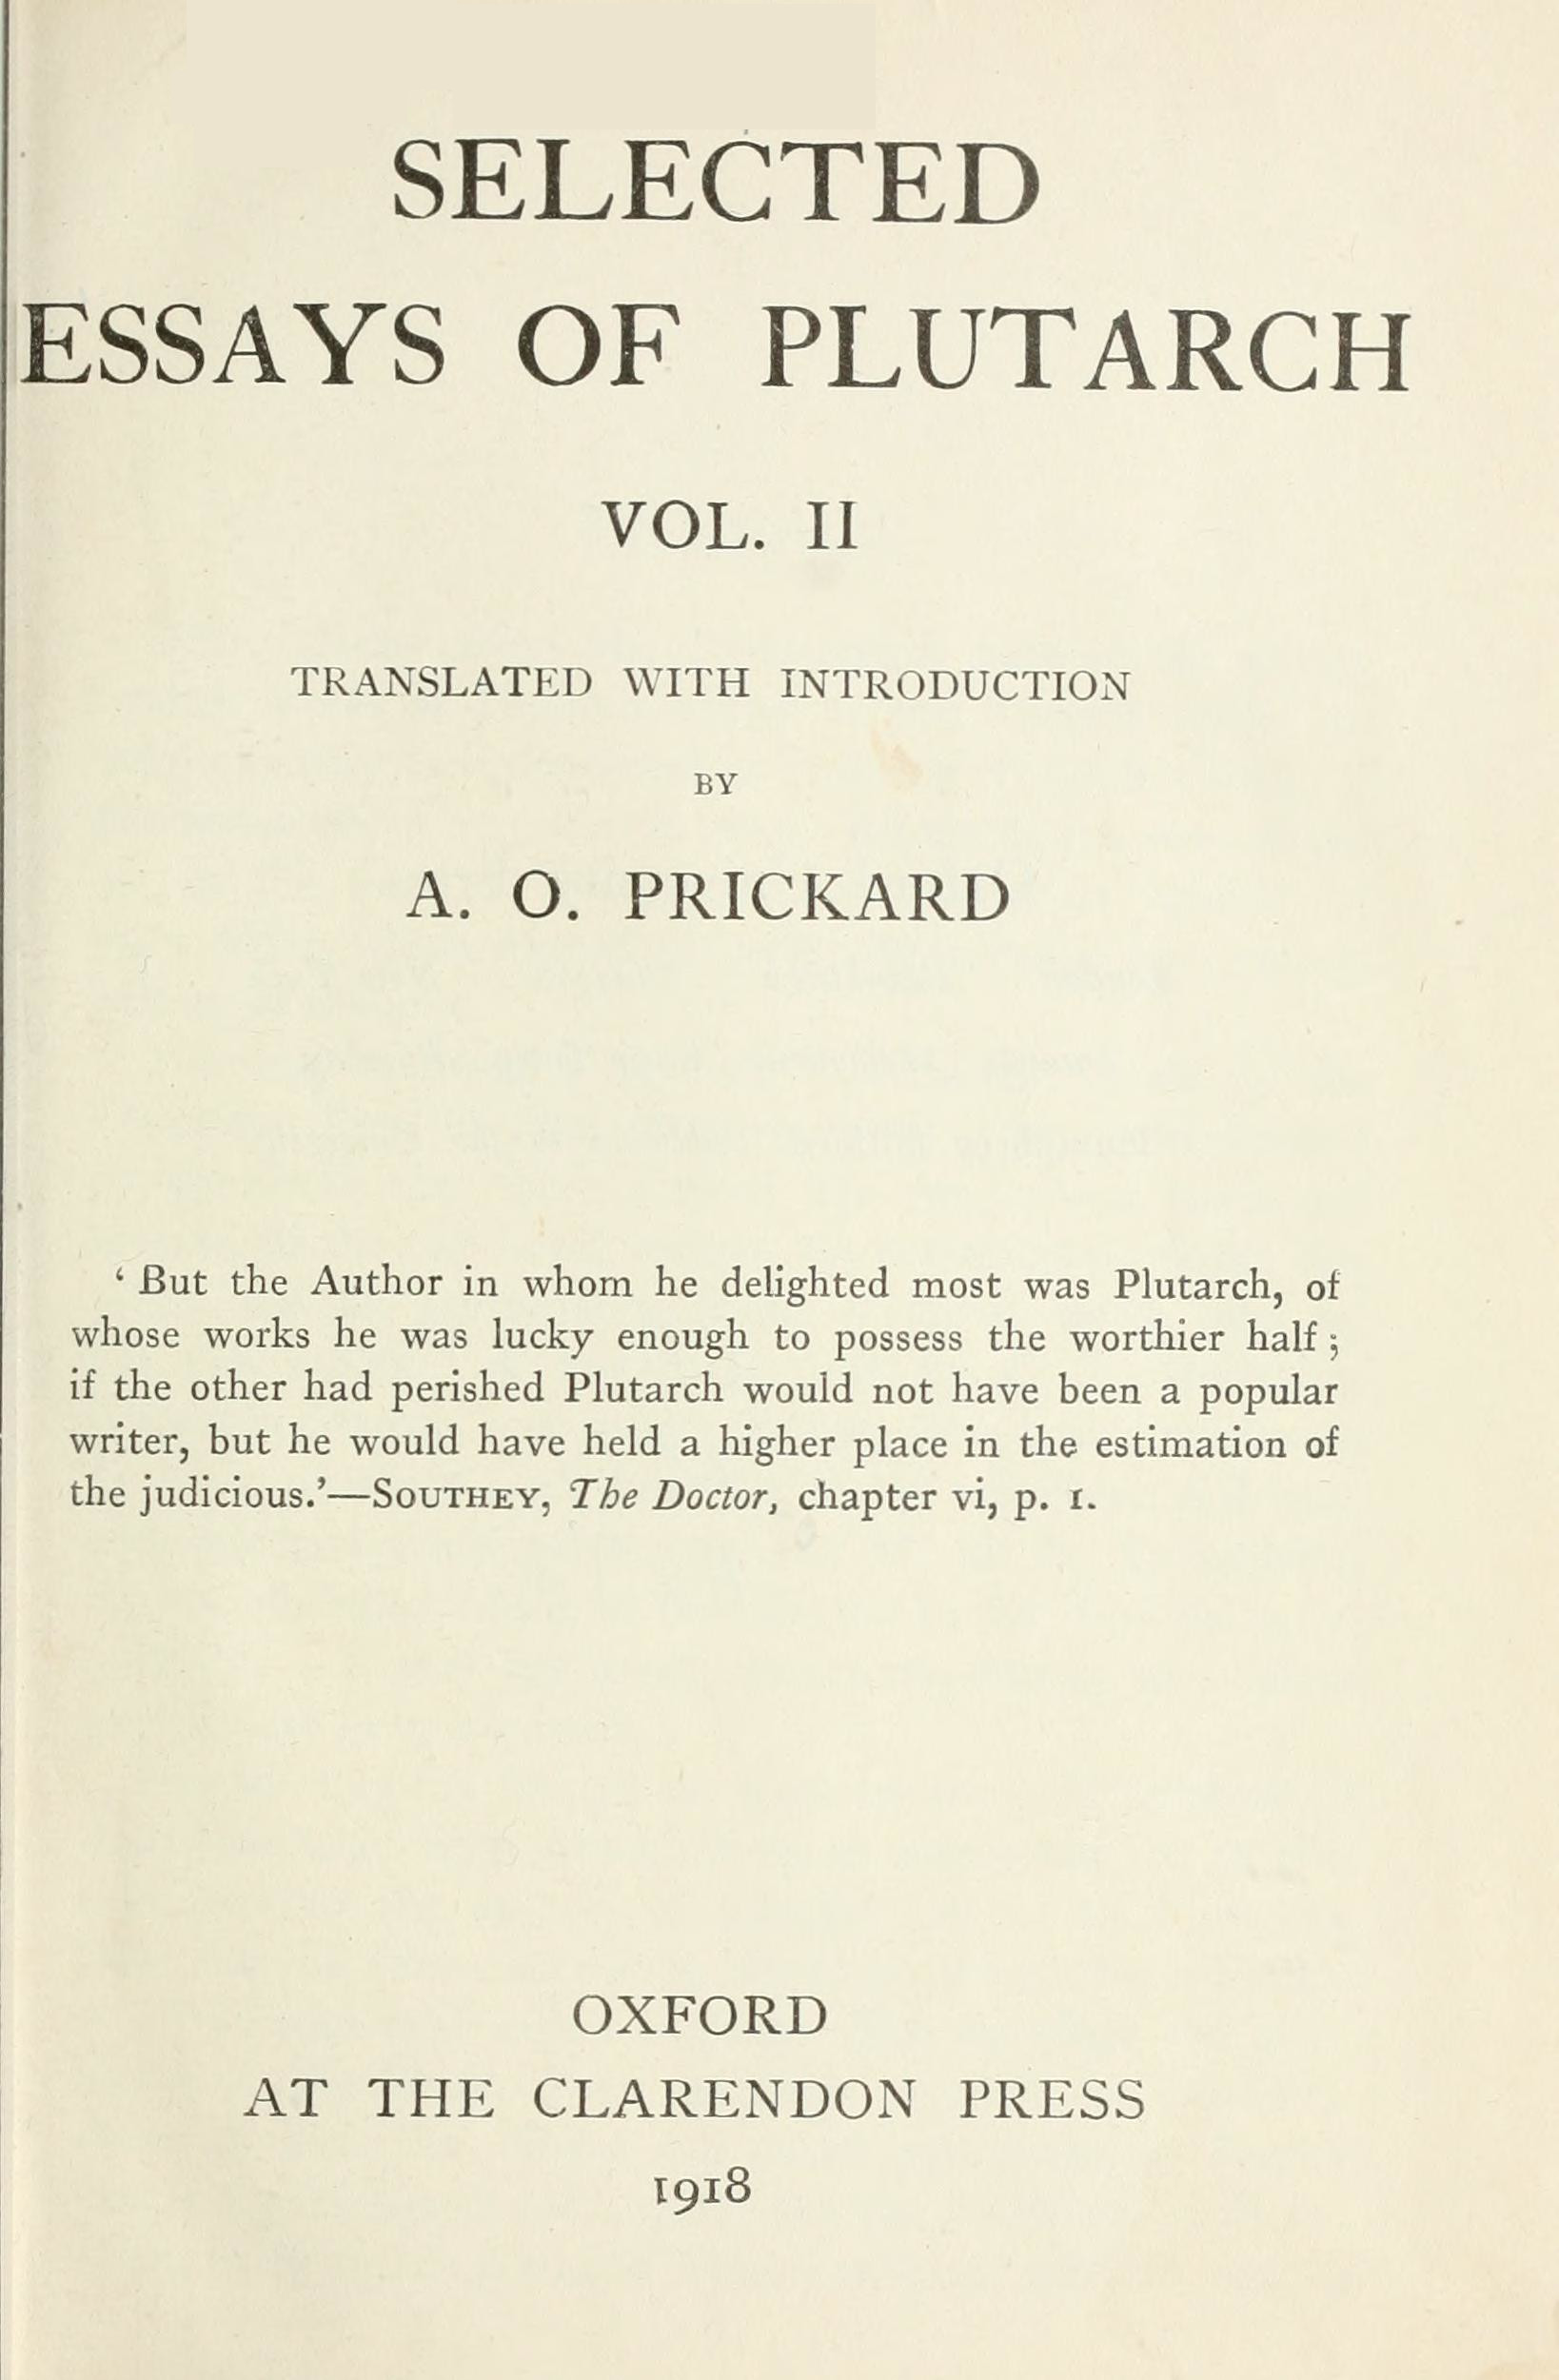 Selected Essays of Plutarch, Vol. II.